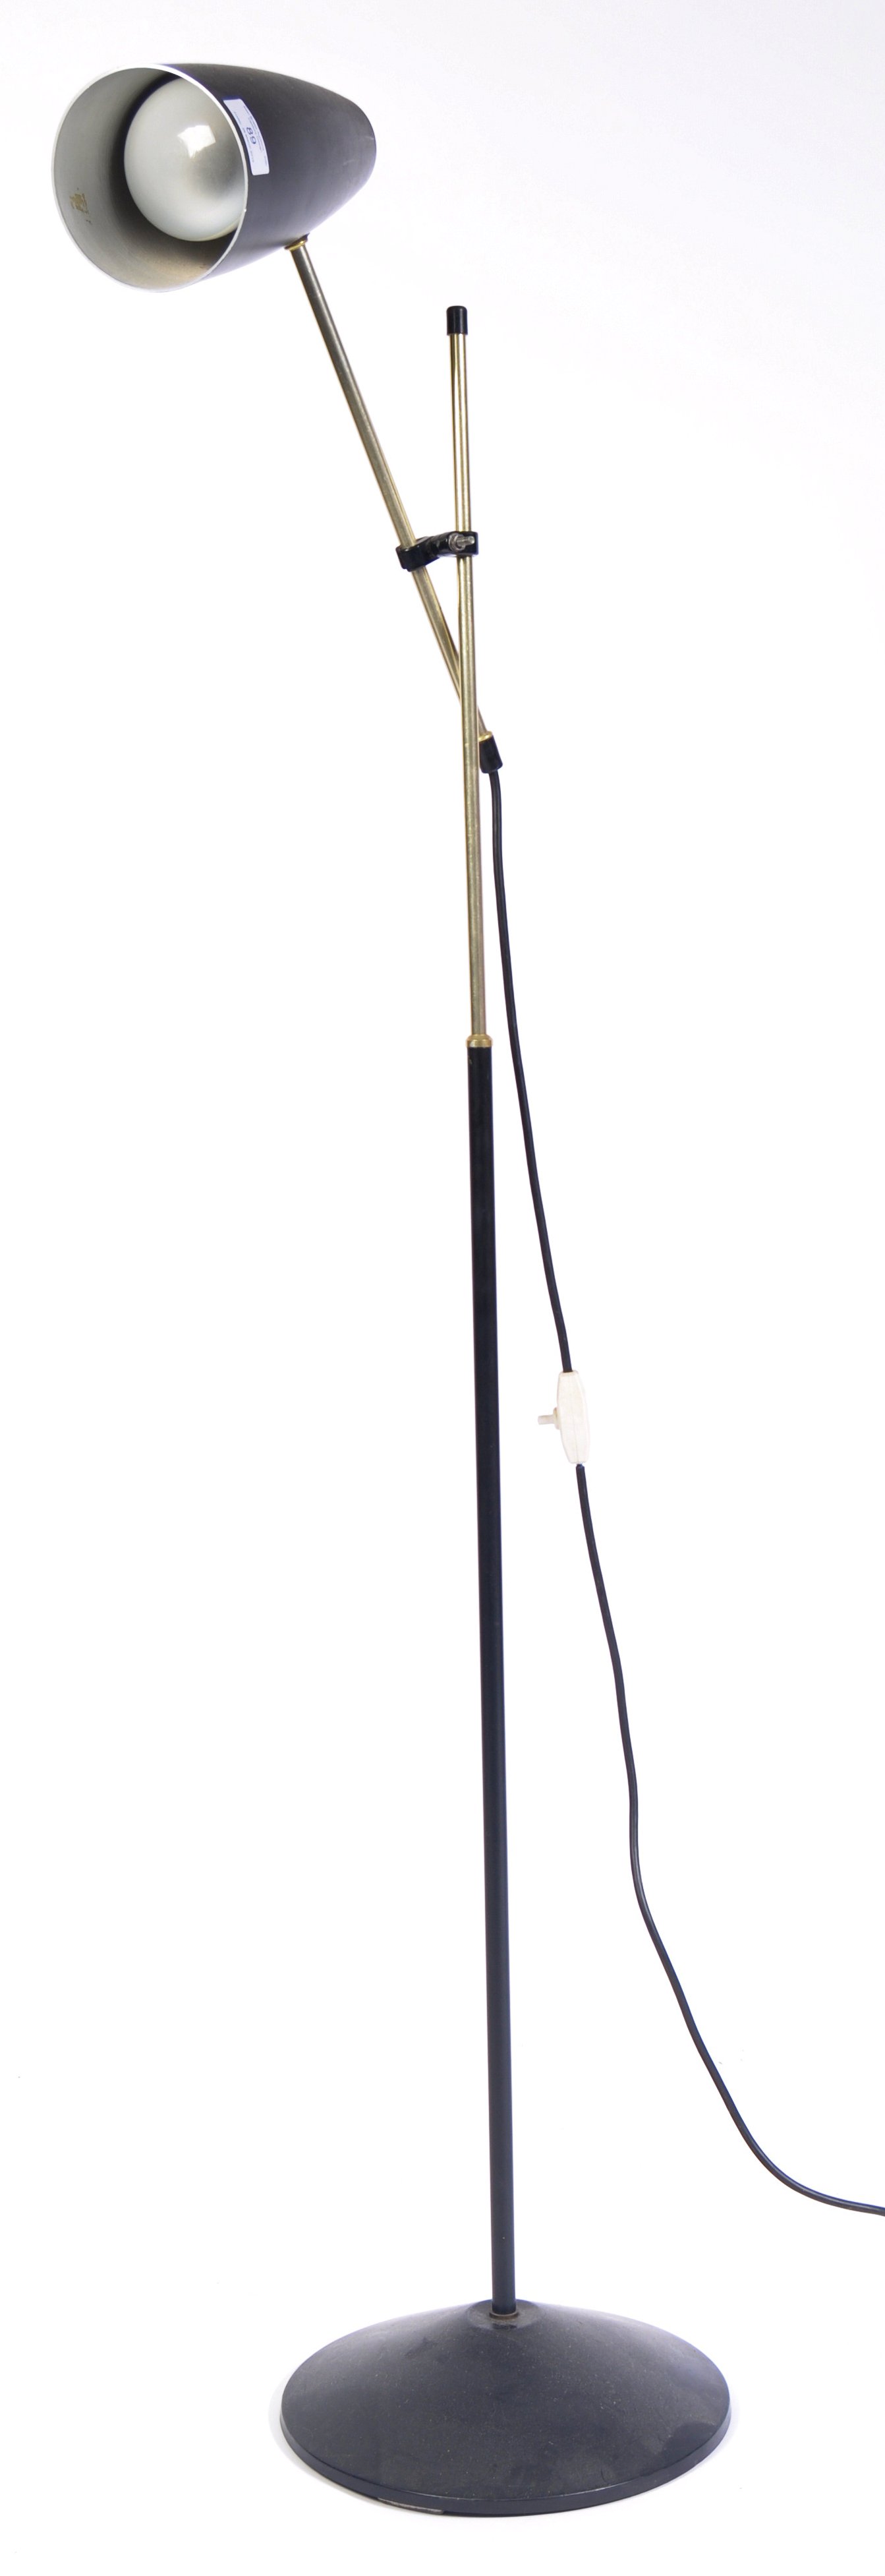 20TH CENTURY RETRO VINTAGE LEVER ARM STANDARD LAMP - Image 2 of 6